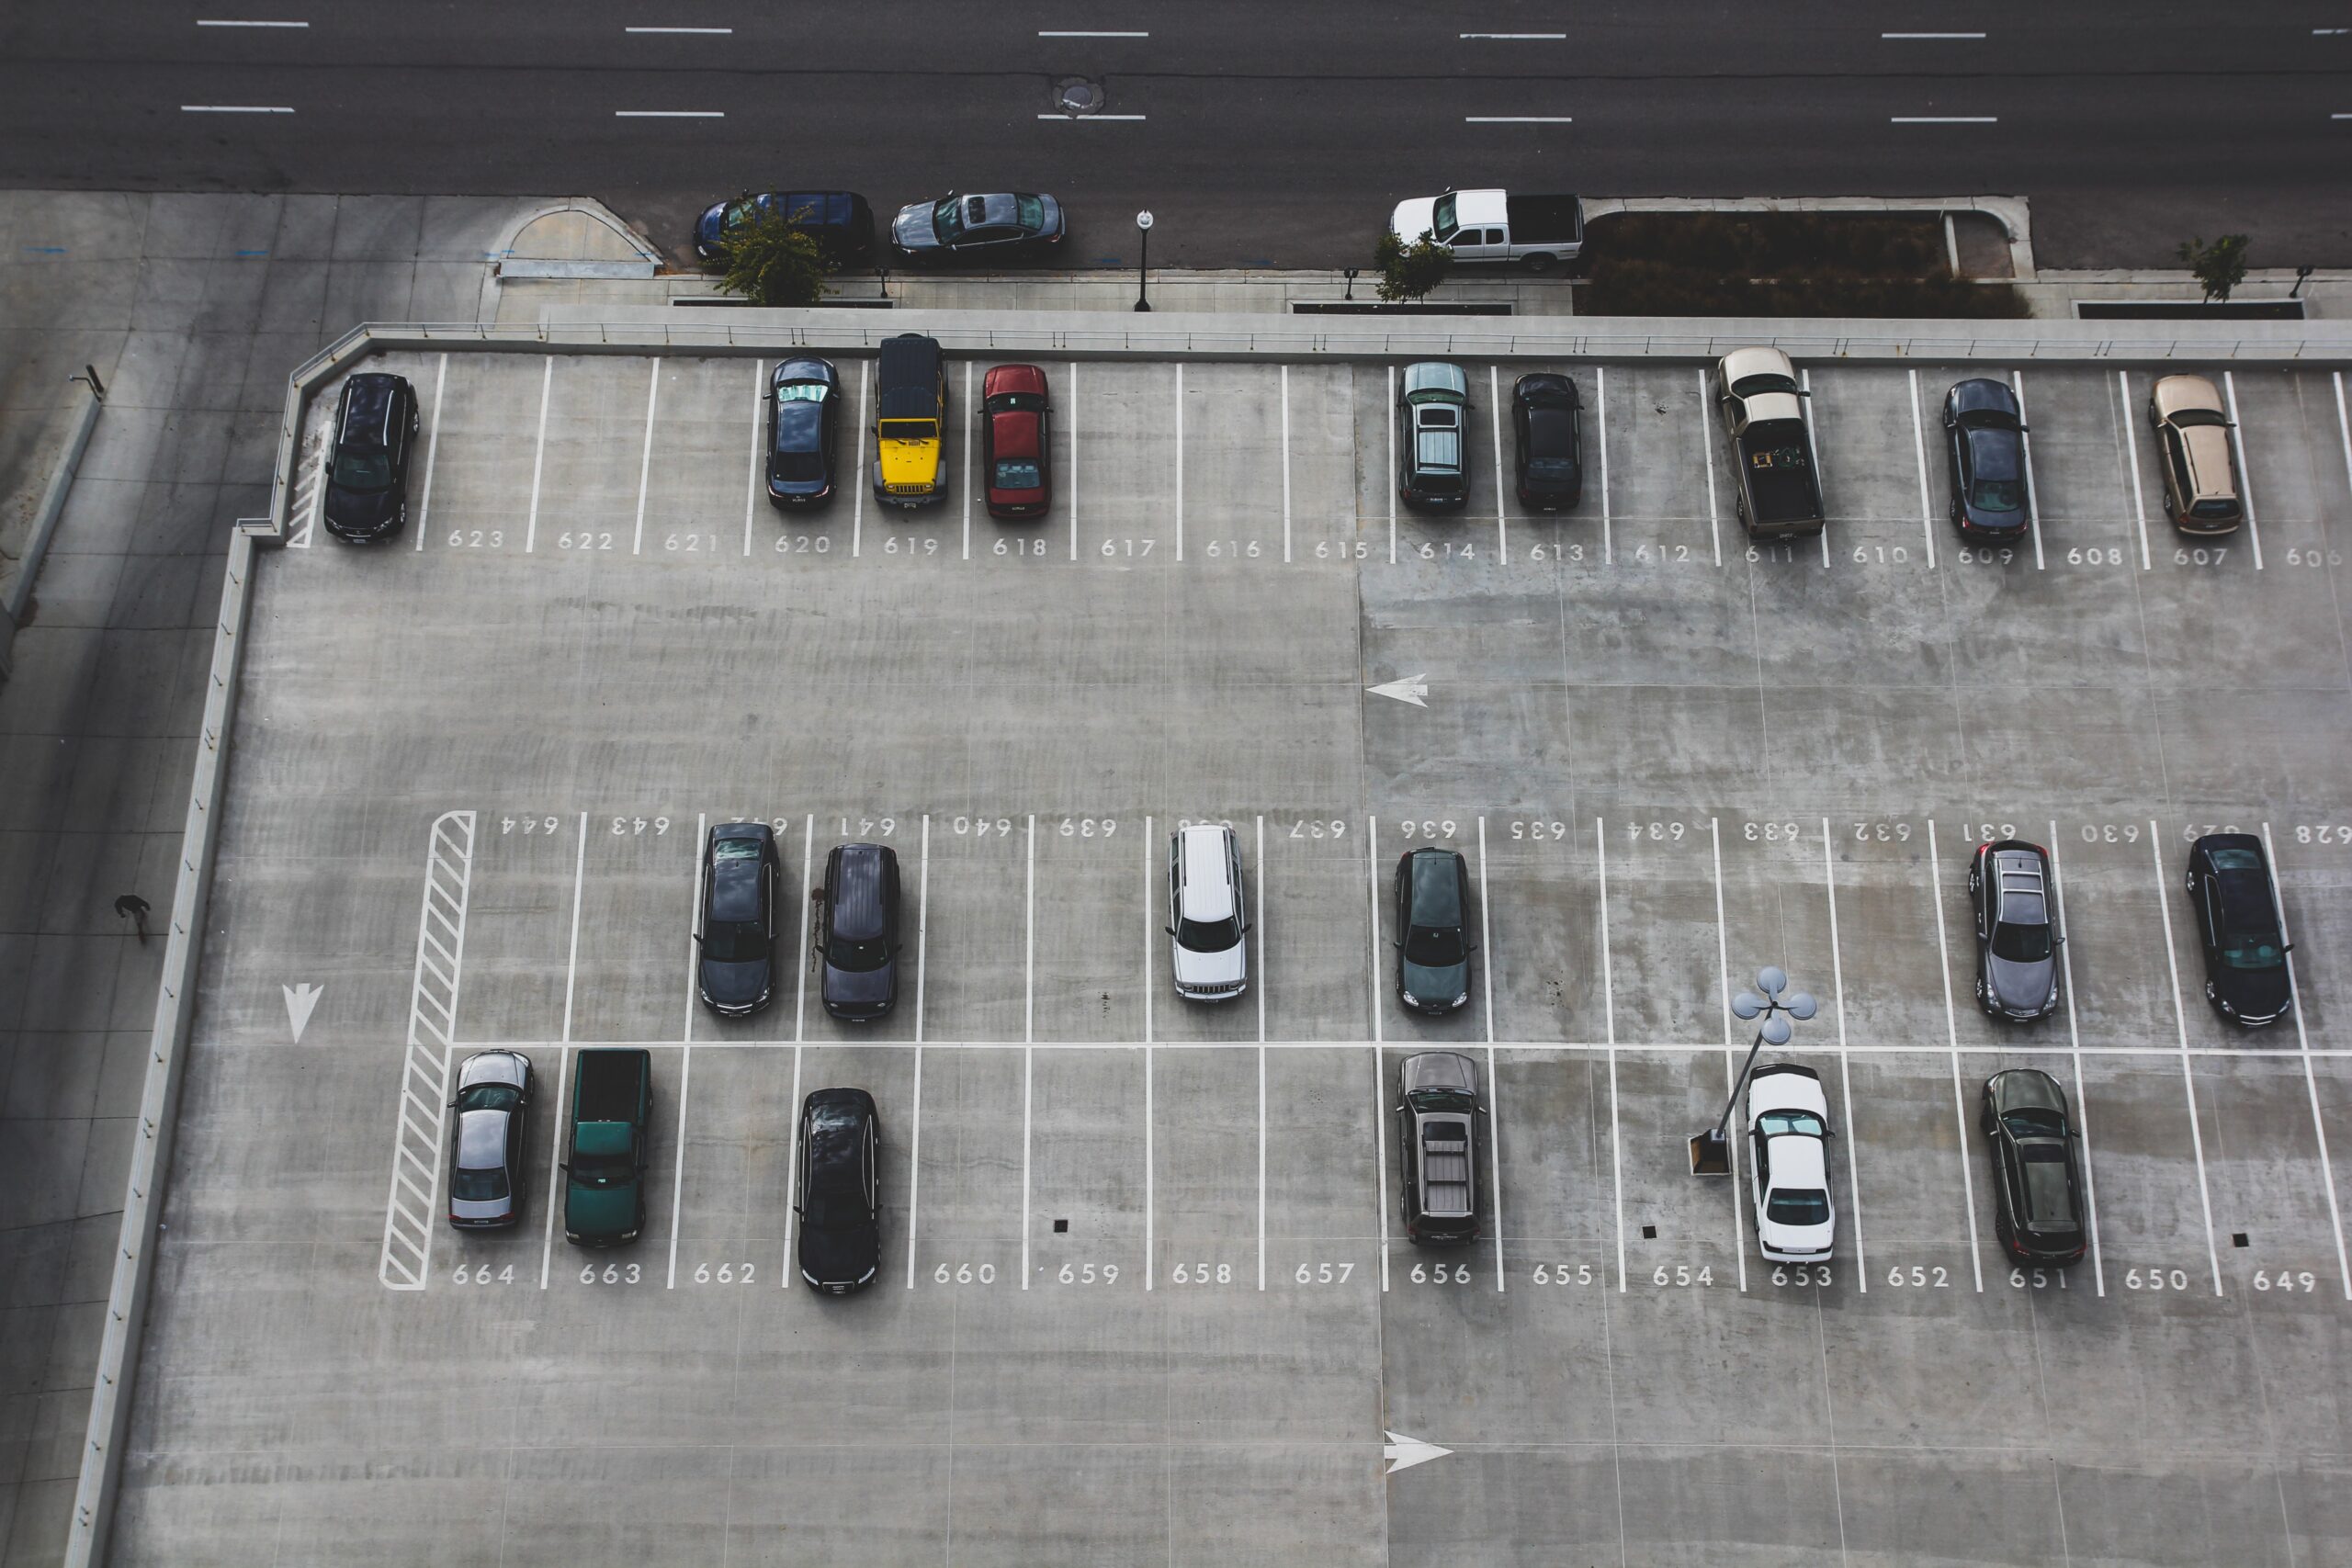 Planet Hollywood Parking: Valet, Self Parking Garage & Fees In 2023